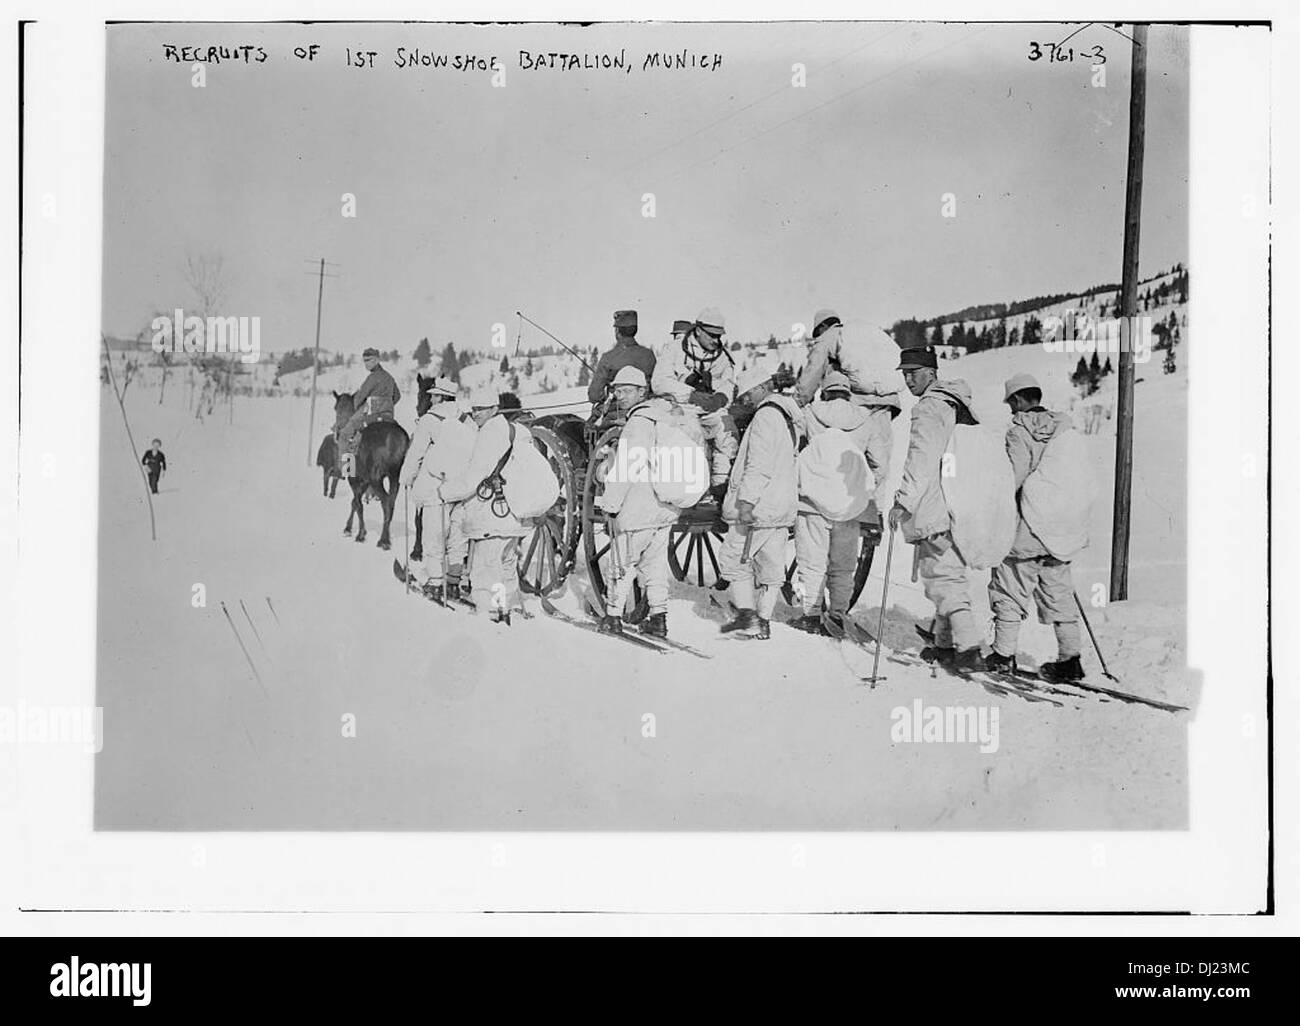 Recruits of 1st Snowshoe Battalion, Munich (LOC) Stock Photo